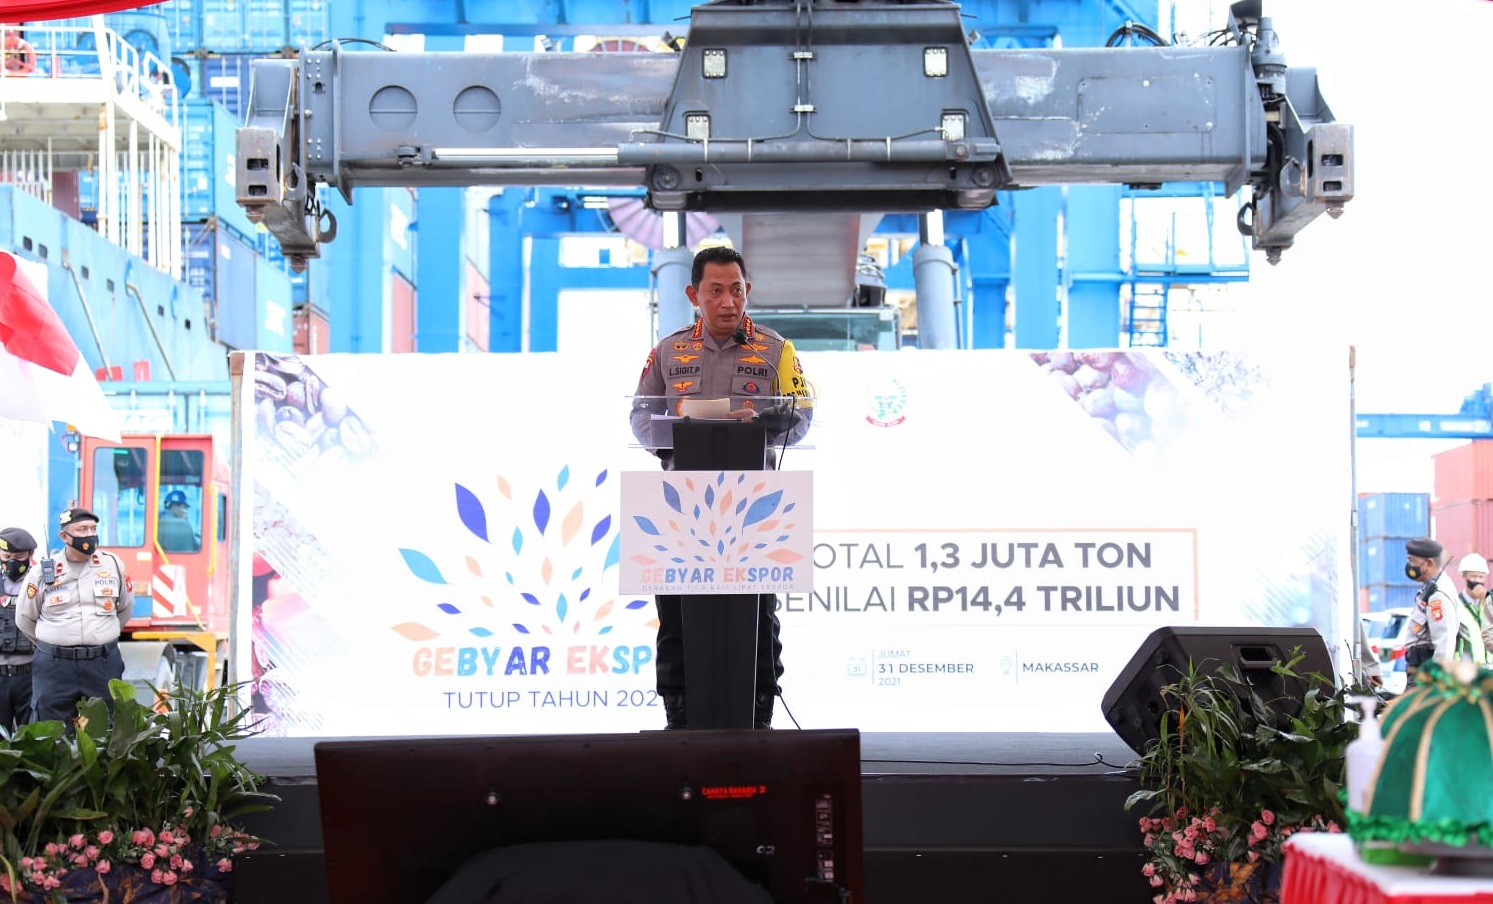 Kapolri Jenderal Listyo Sigit Prabowo menghadiri acara Gebyar Ekspor Tutup Tahun 2021 di Sulsel. (Foto: PMJ News).